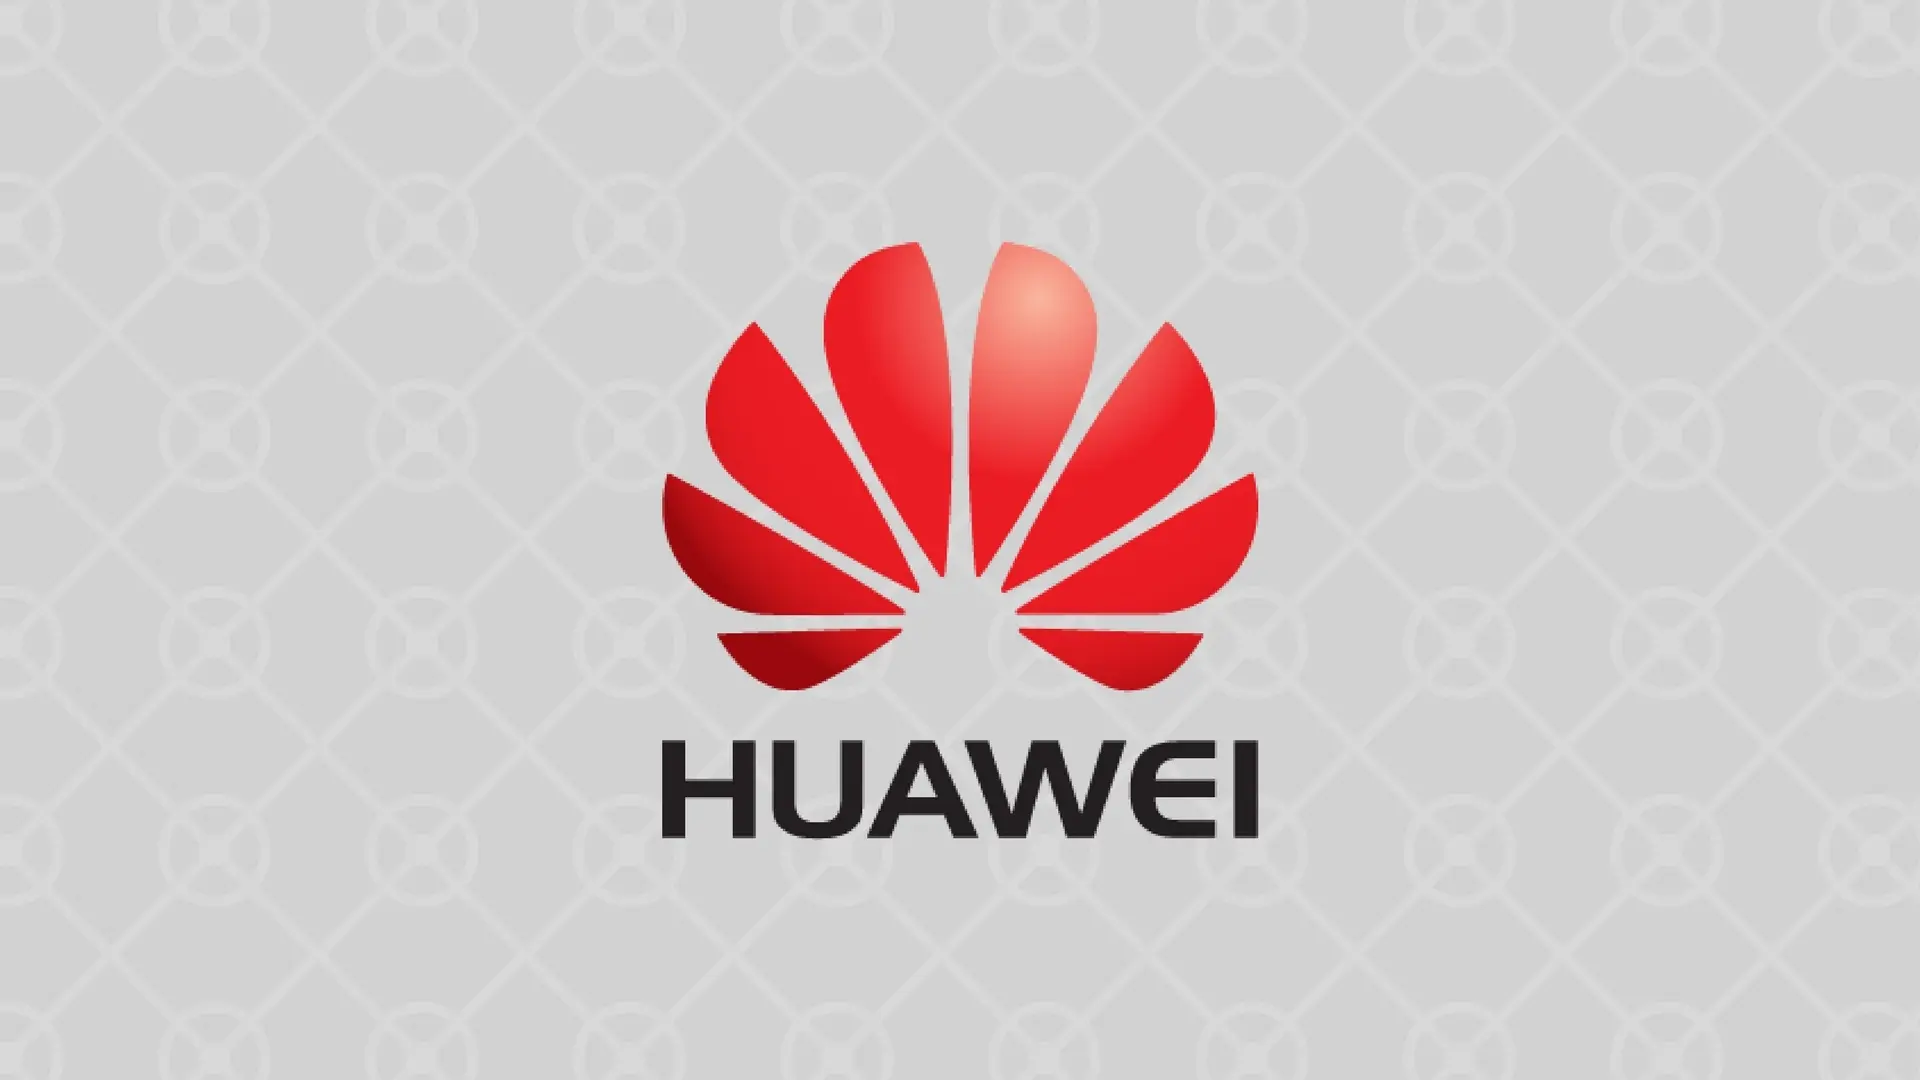 Huawei publica carta para tranquilizar a sus usuarios